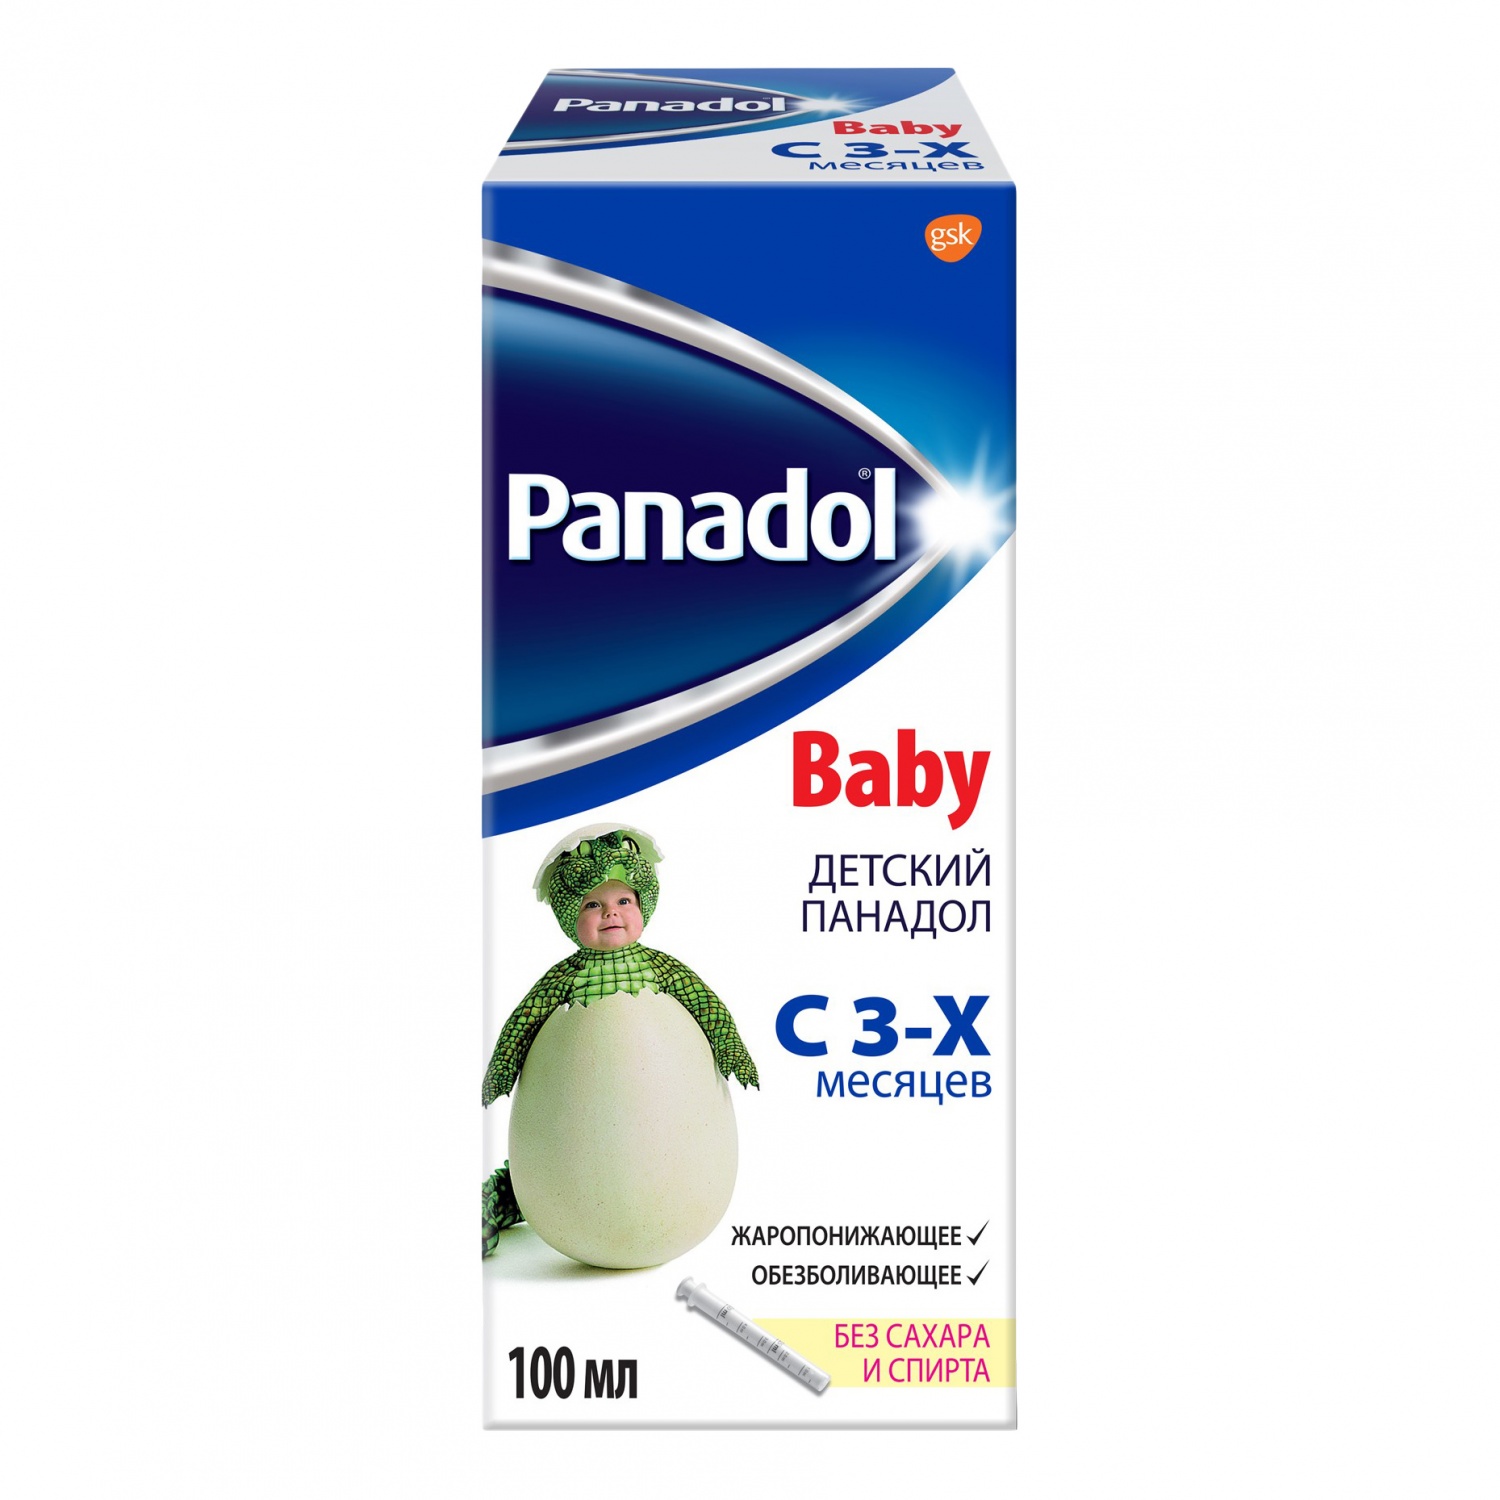 Средства д/лечения простуды и гриппа GlaxoSmithKline Pharmaceuticals SA Панадол (Panadol) детский фото